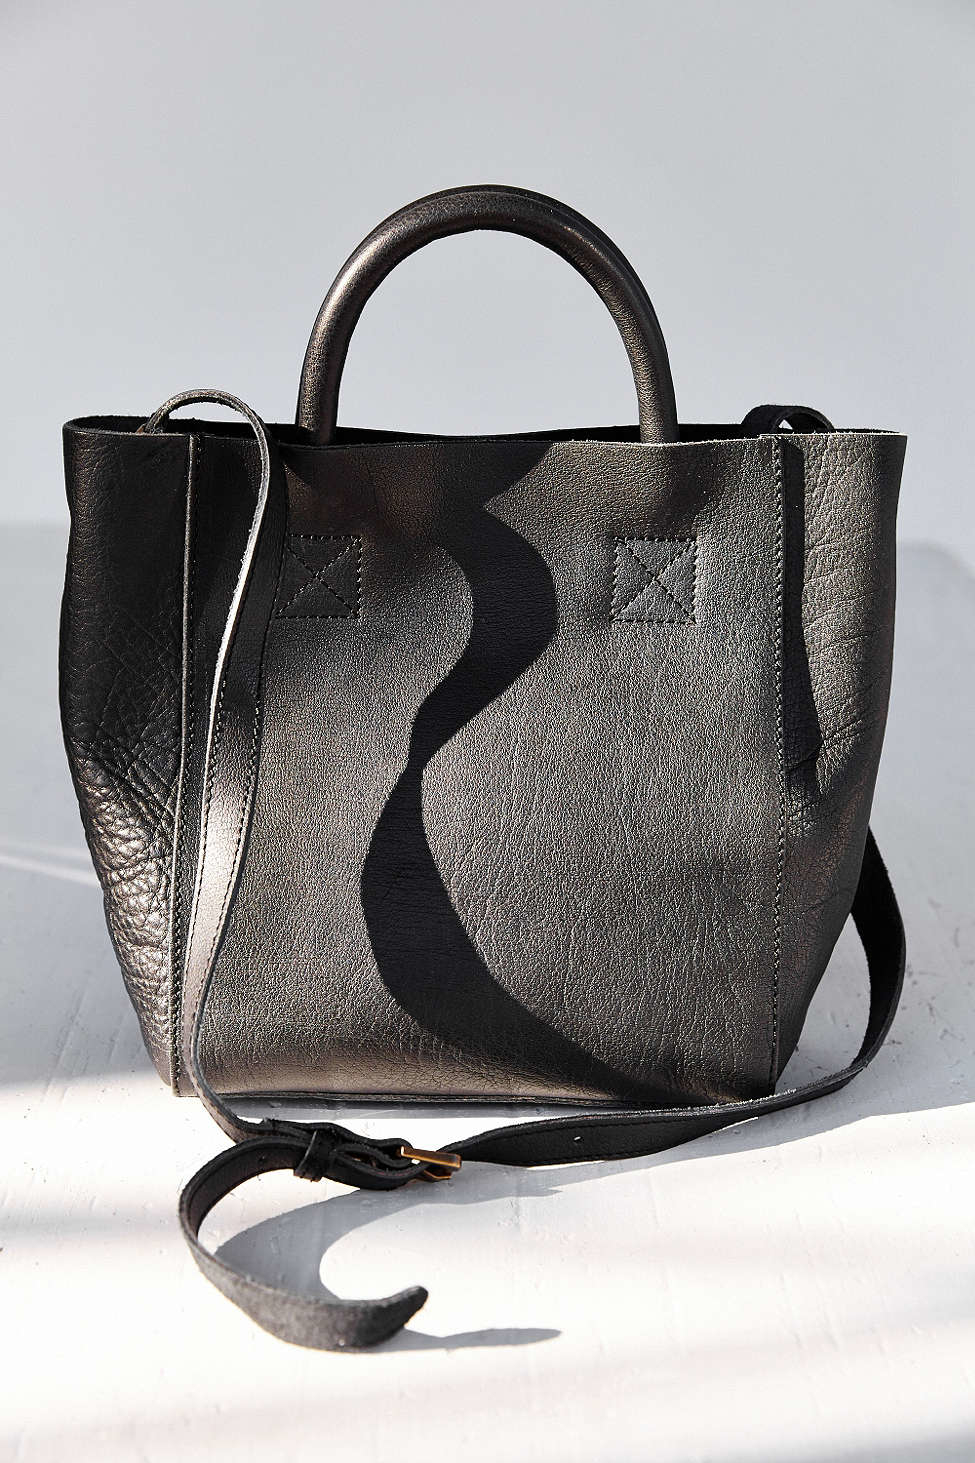 Lyst - BDG Mini Leather Tote Bag in Black